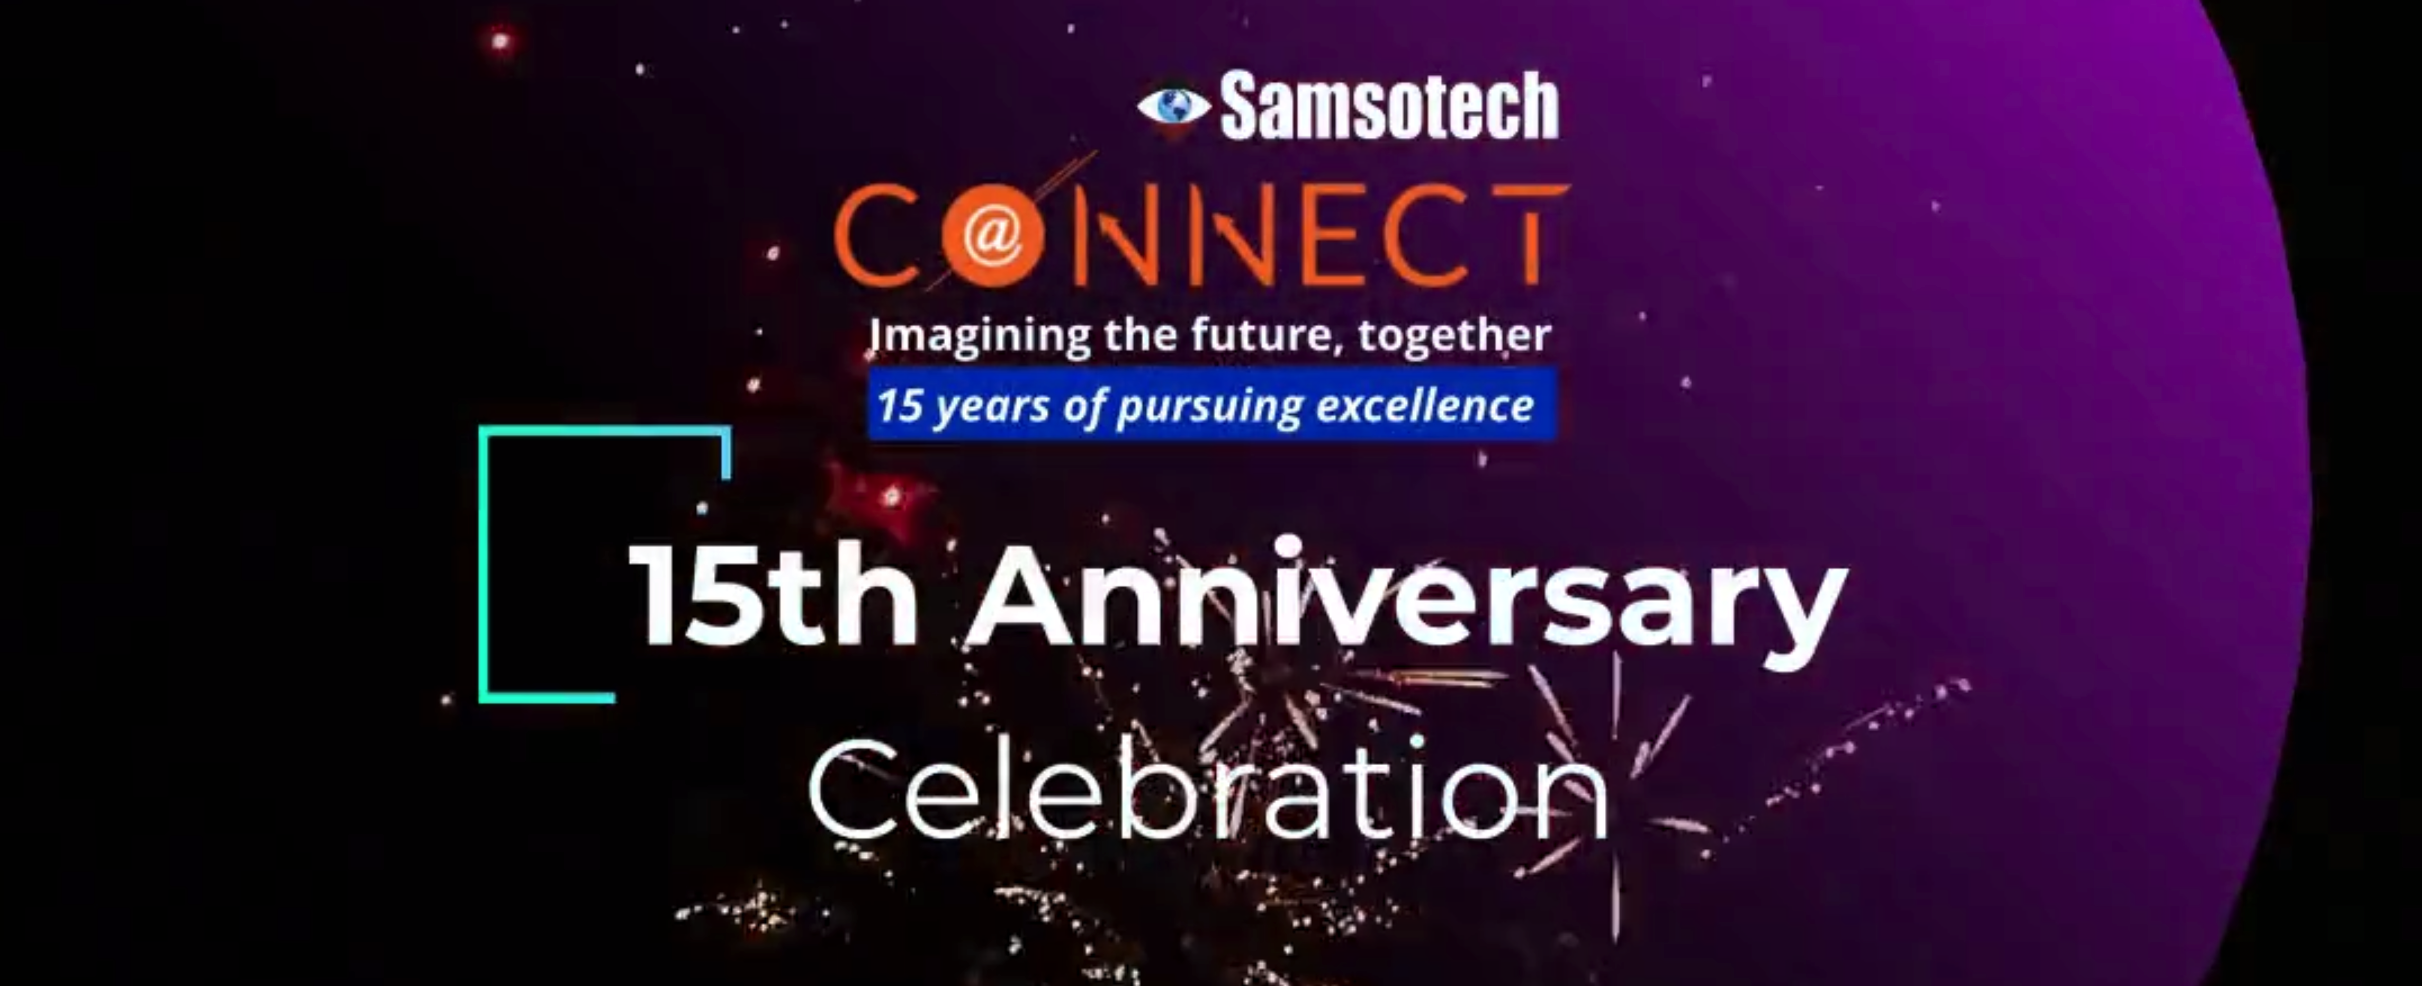 Samsotech’s 15th anniversary